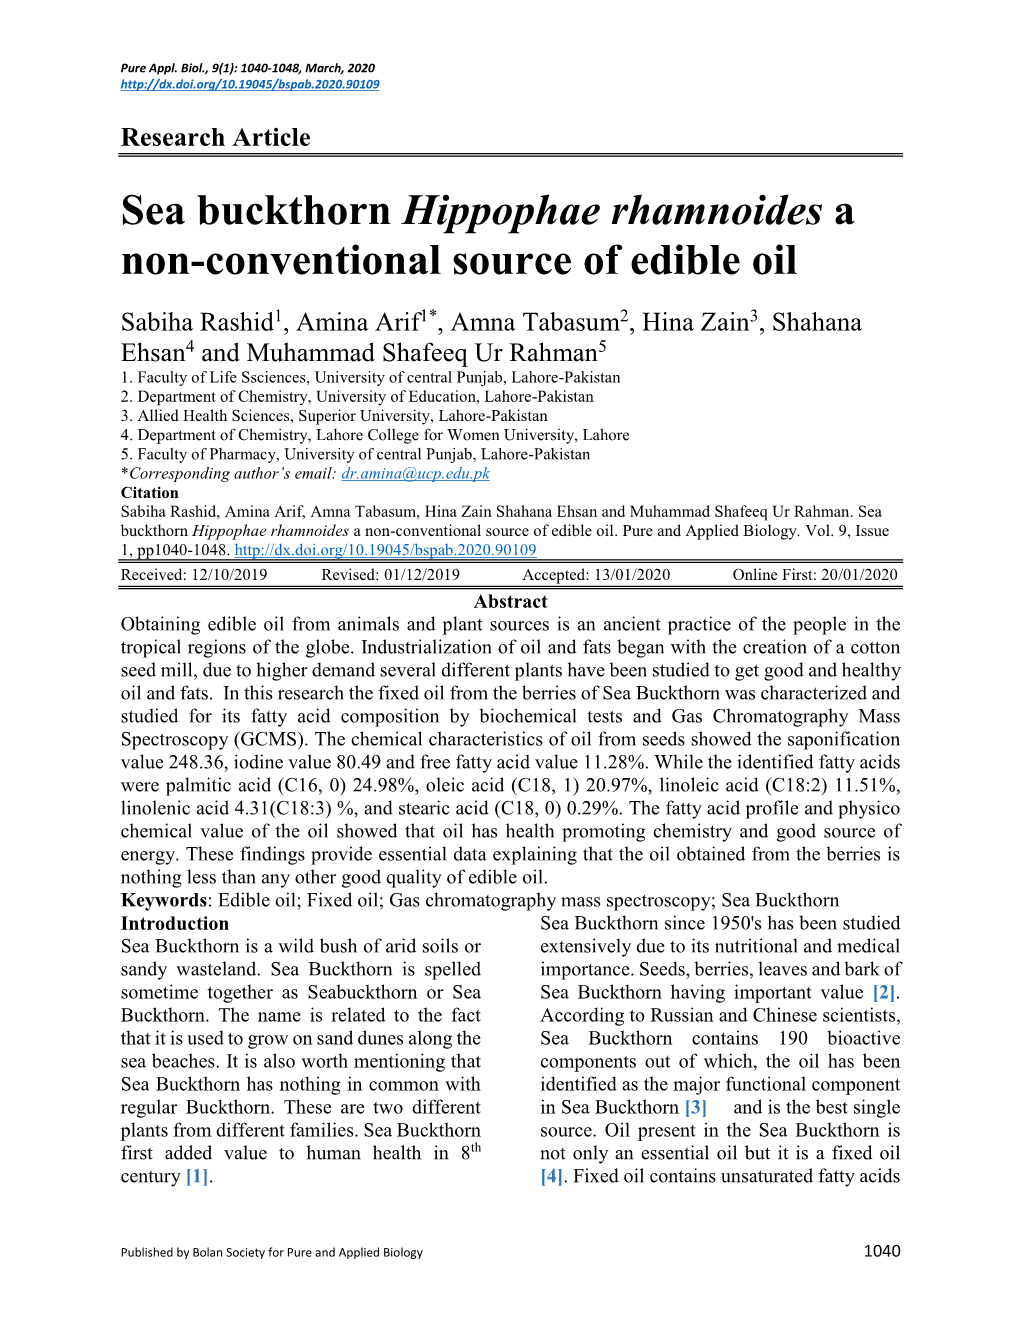 Sea Buckthorn Hippophae Rhamnoides a Non-Conventional Source of Edible Oil